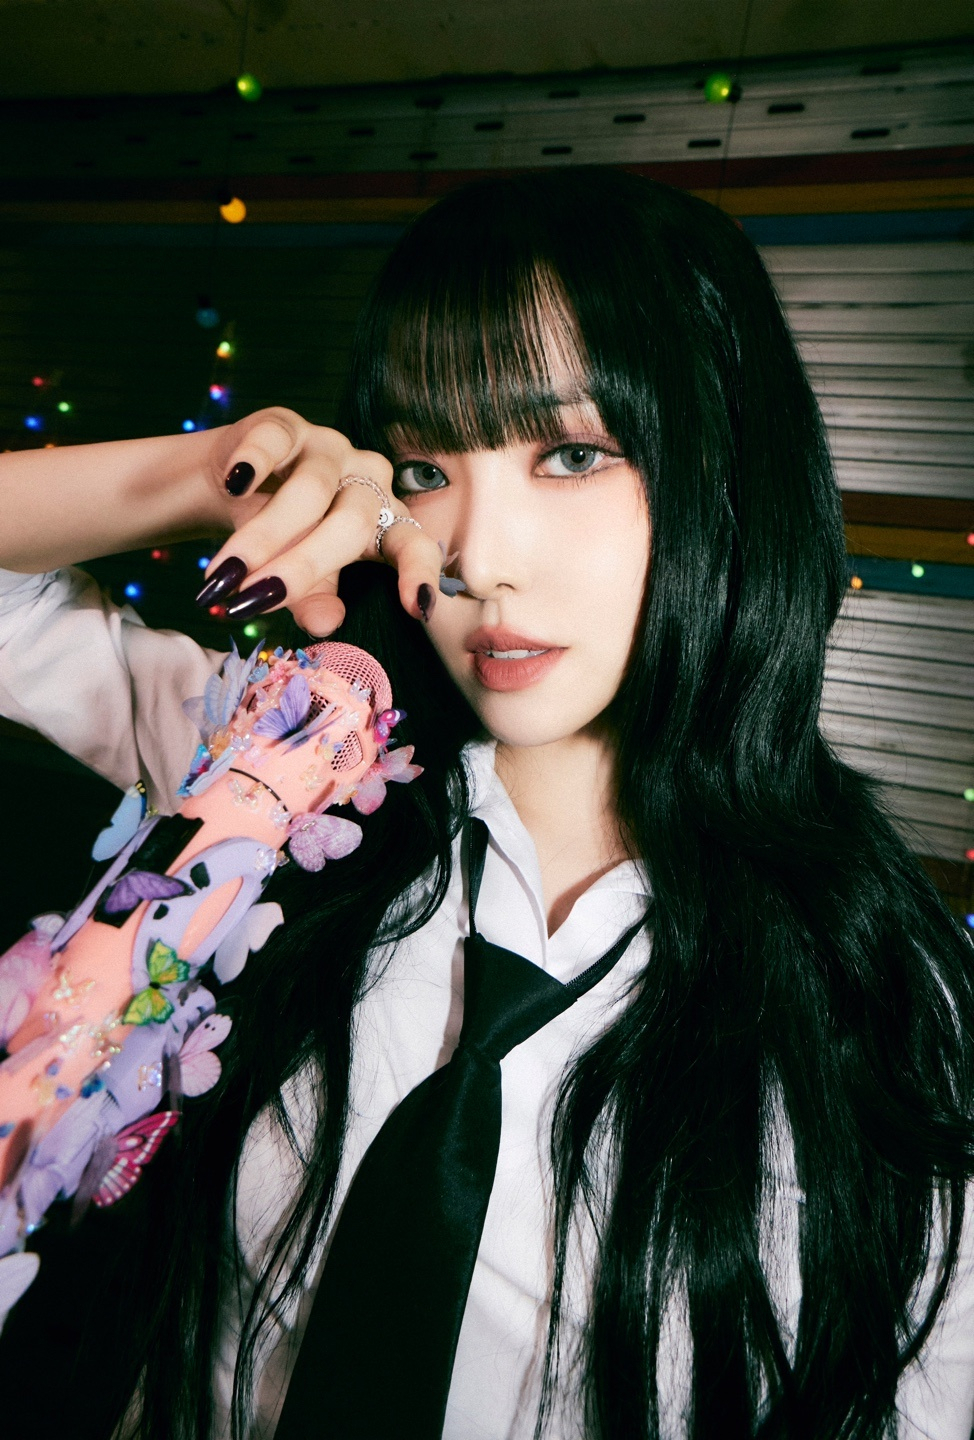 An image for Yuju's digital single 